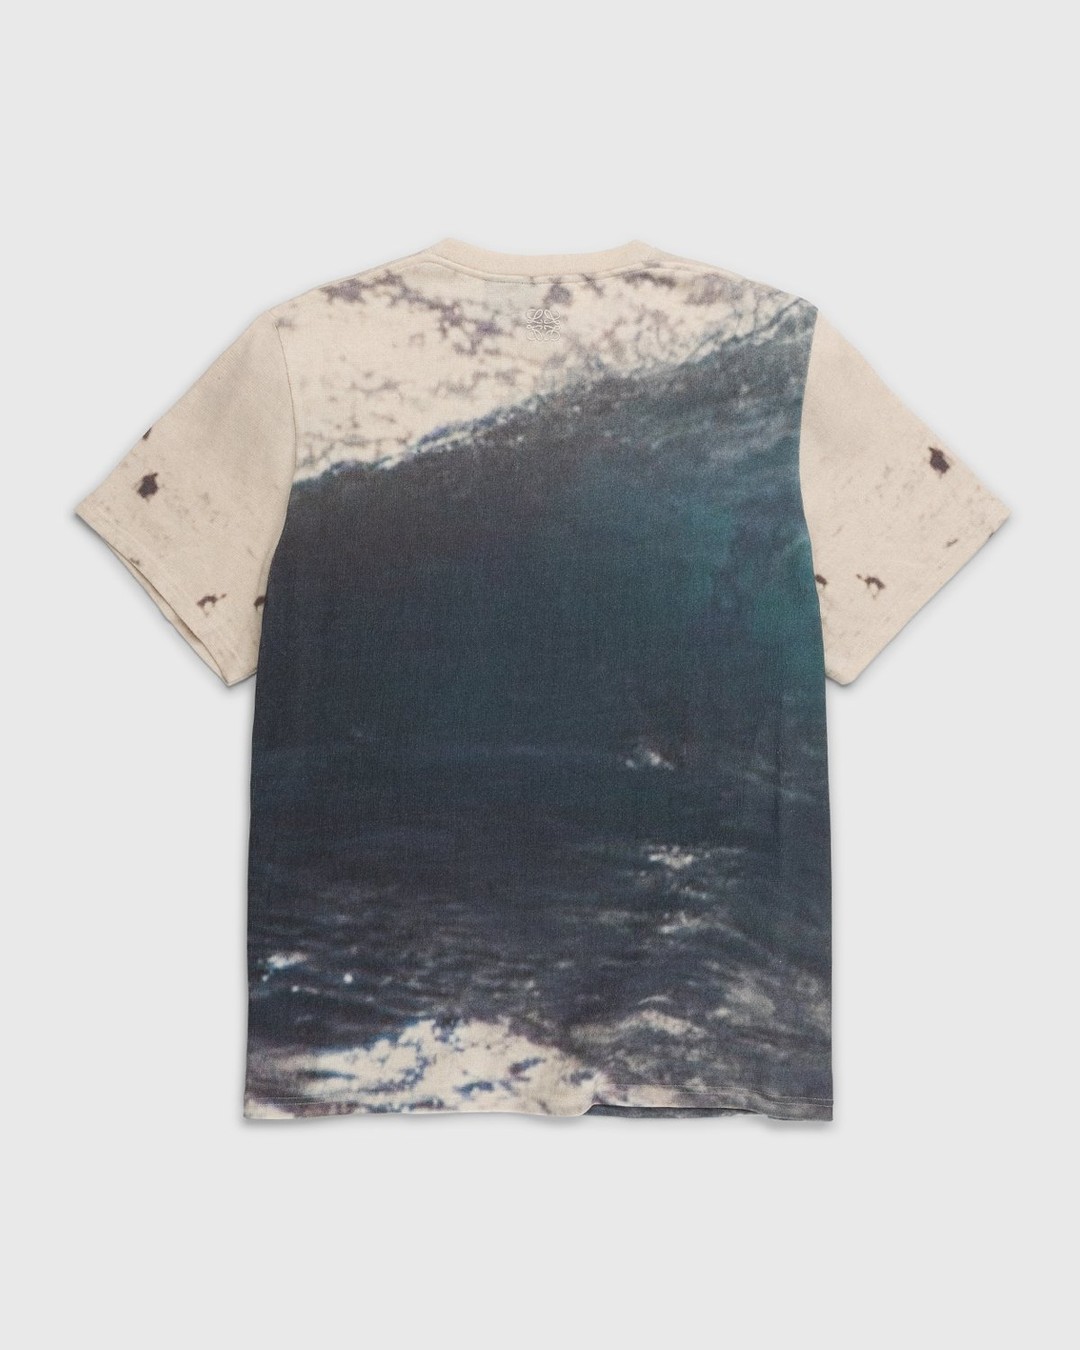 Loewe – Paula's Ibiza Surf Print T-Shirt Ecru/Navy Blue - Tops - Multi - Image 2